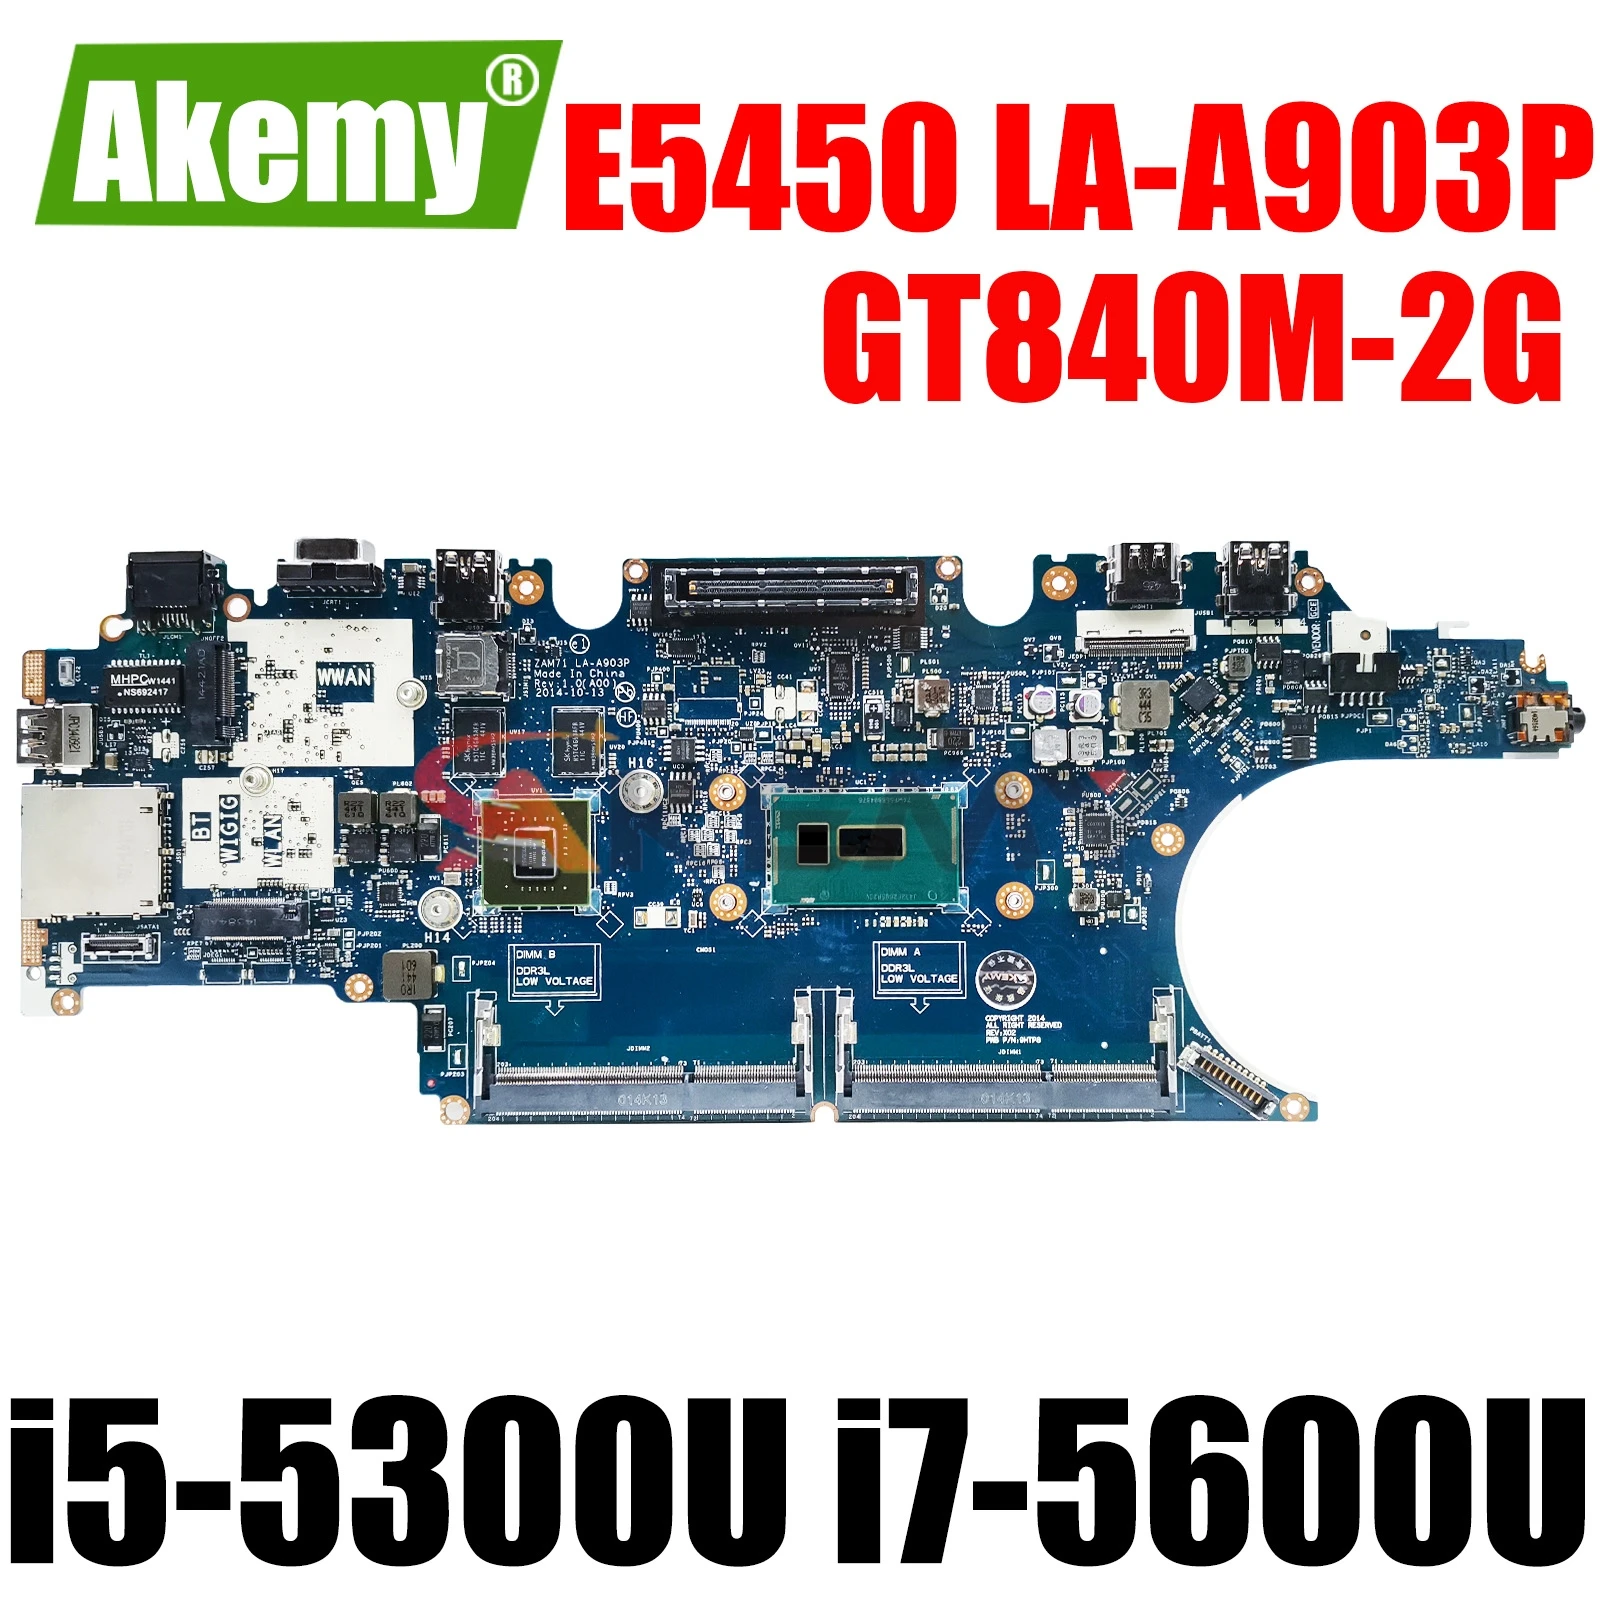 

i5-5300U i7-5600U GT840M/2GB For Dell Latitude E5450 Laptop Motherboard ZAM71 LA-A903P CN-017FG2 CN-0RH5PW Notebook Mainboard